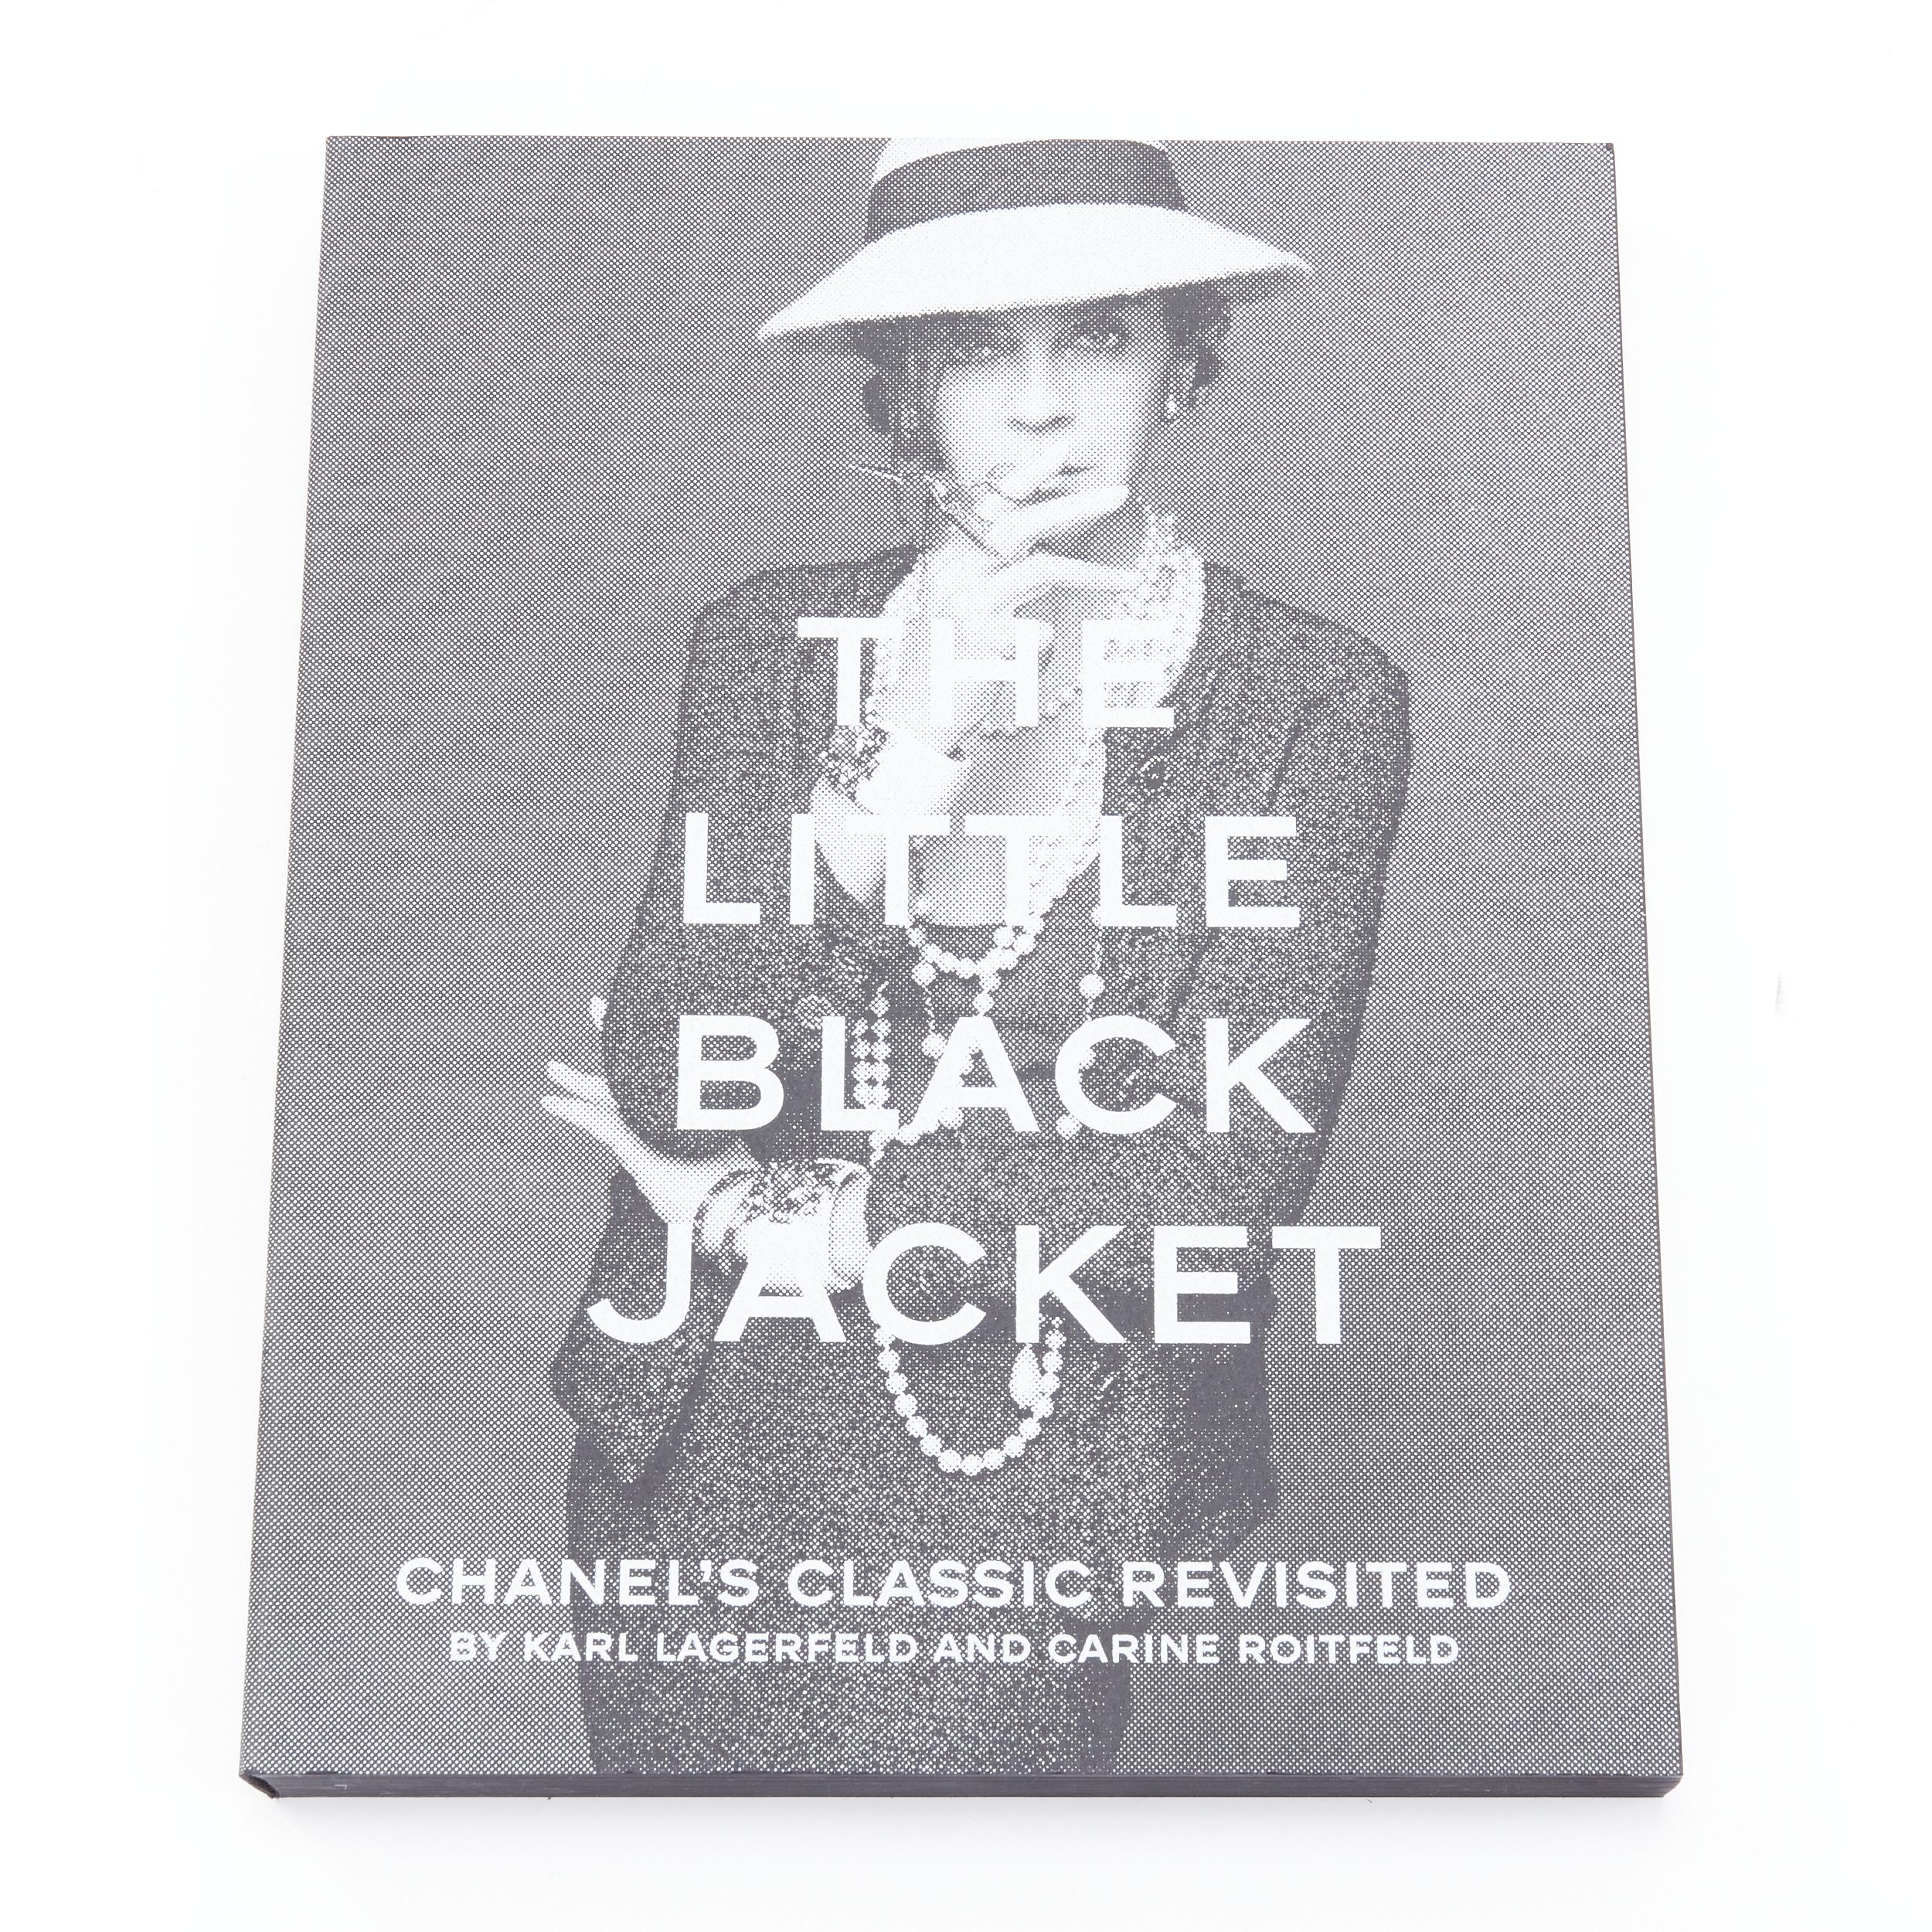 chanel black jacket book